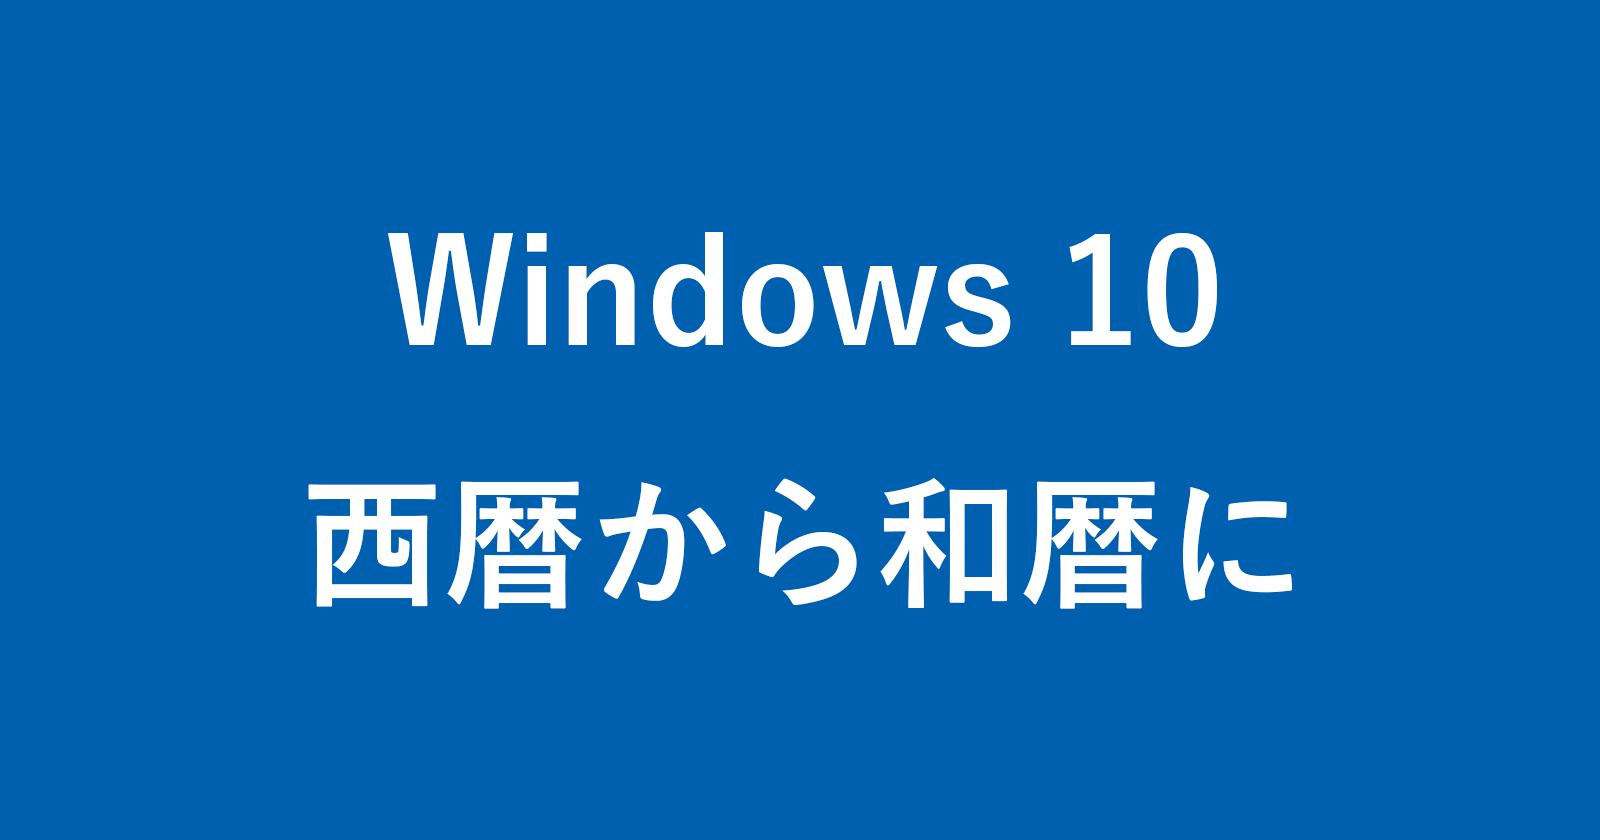 windows 10 year format